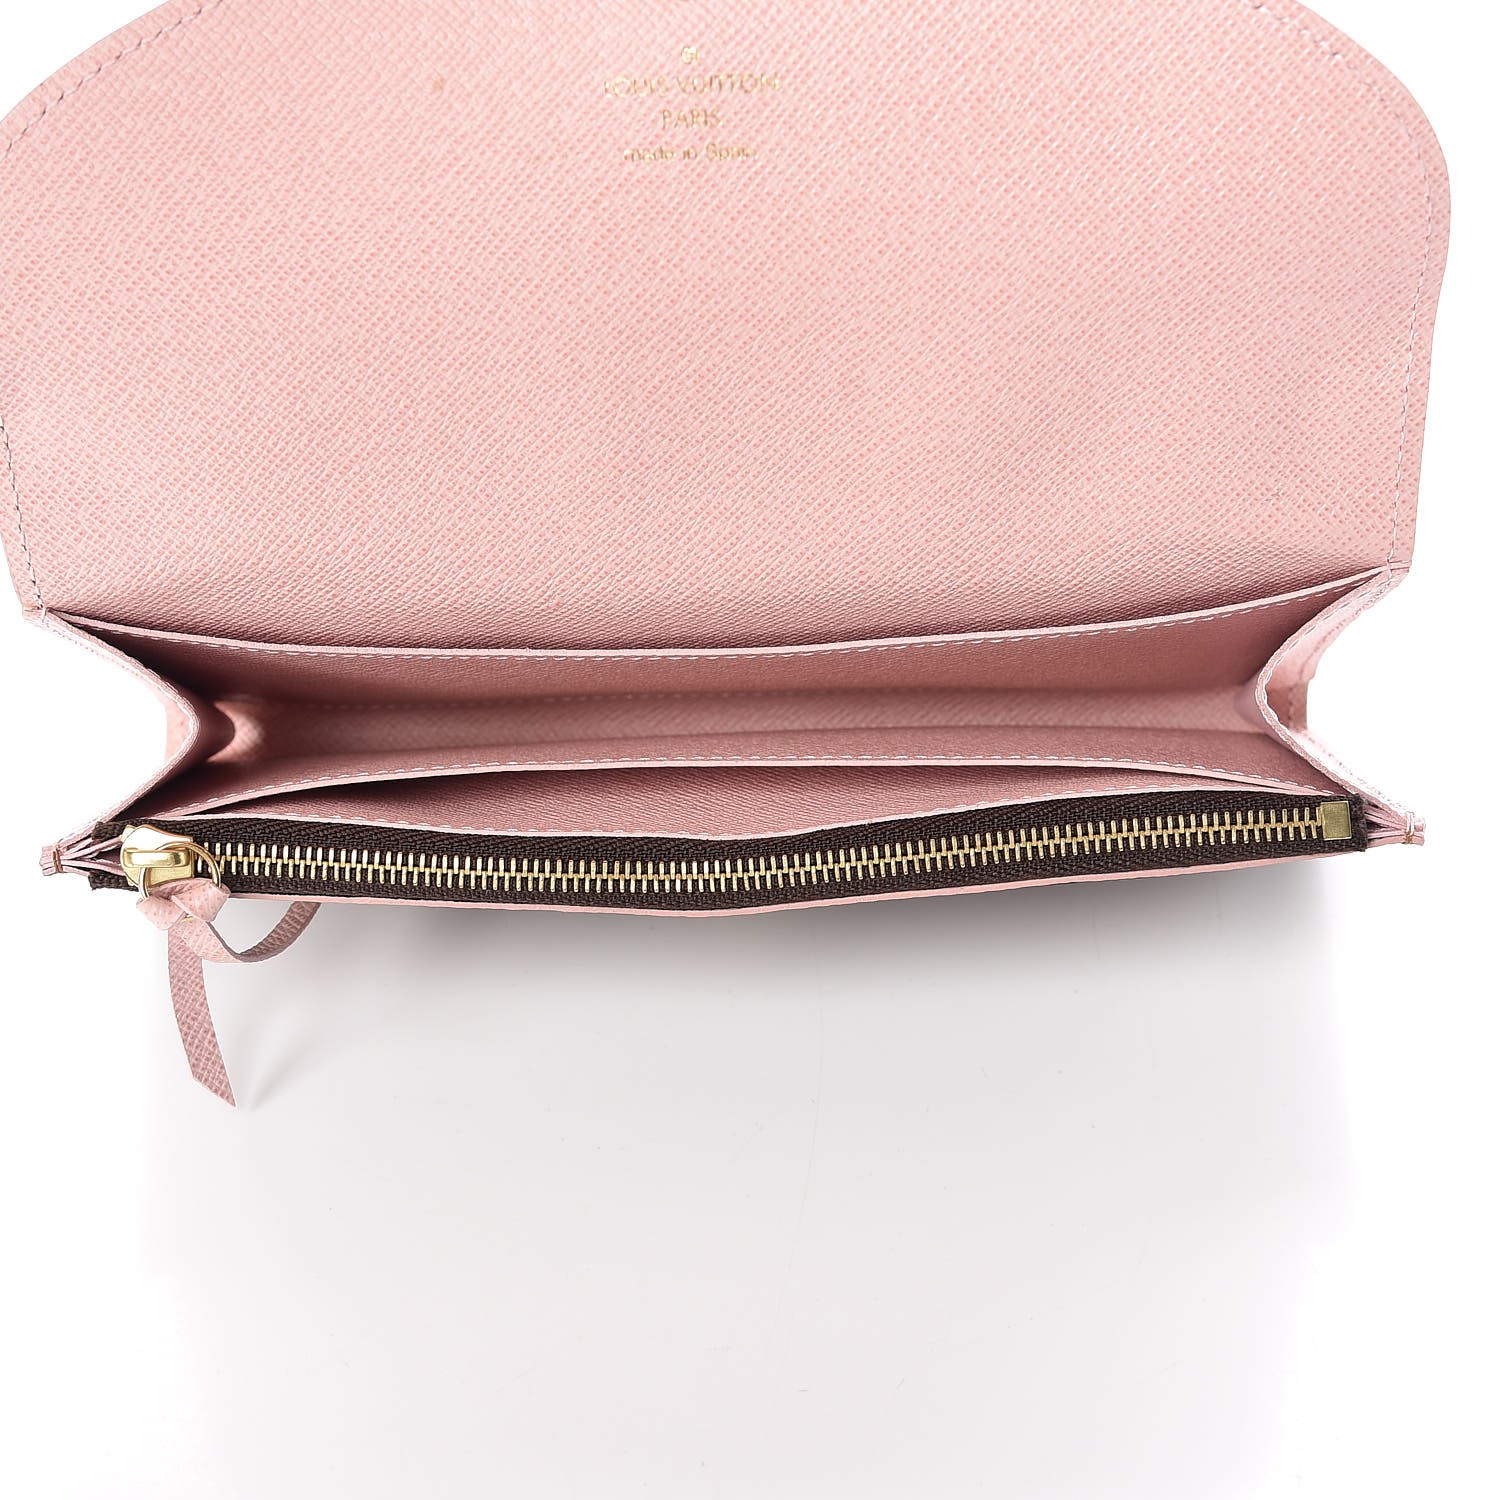 Authentic Louis Vuitton Caissa damier ebene snap wallet with pink trim